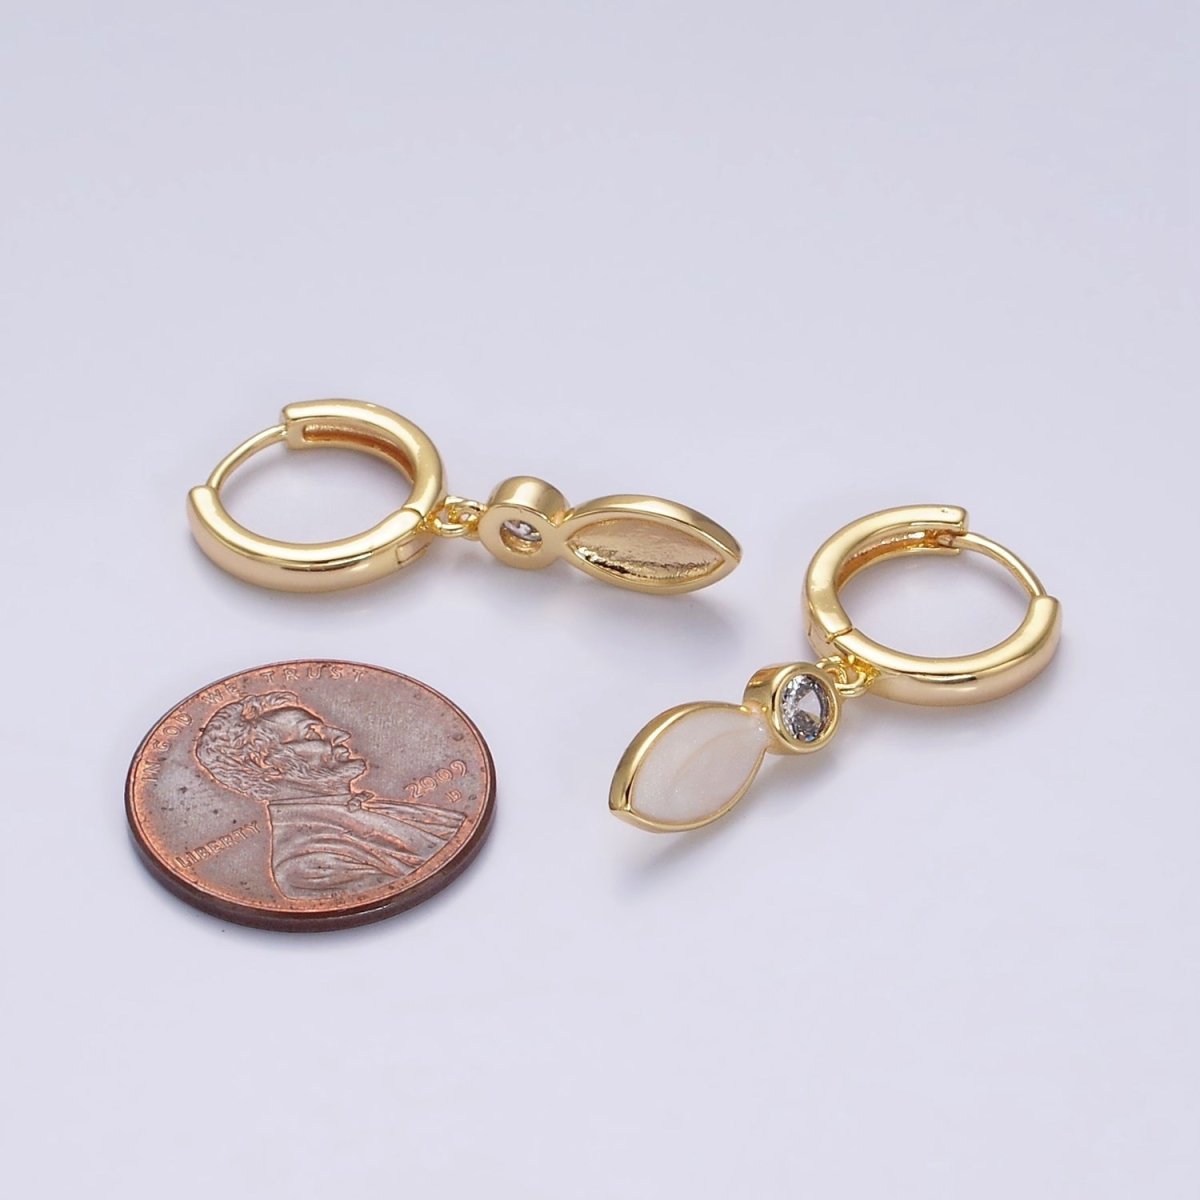 16K Gold Filled White, Blue, Pink Sparkly Enamel Drop Huggie Earrings in Gold & Silver | Y-823 ~ Y-828 - DLUXCA